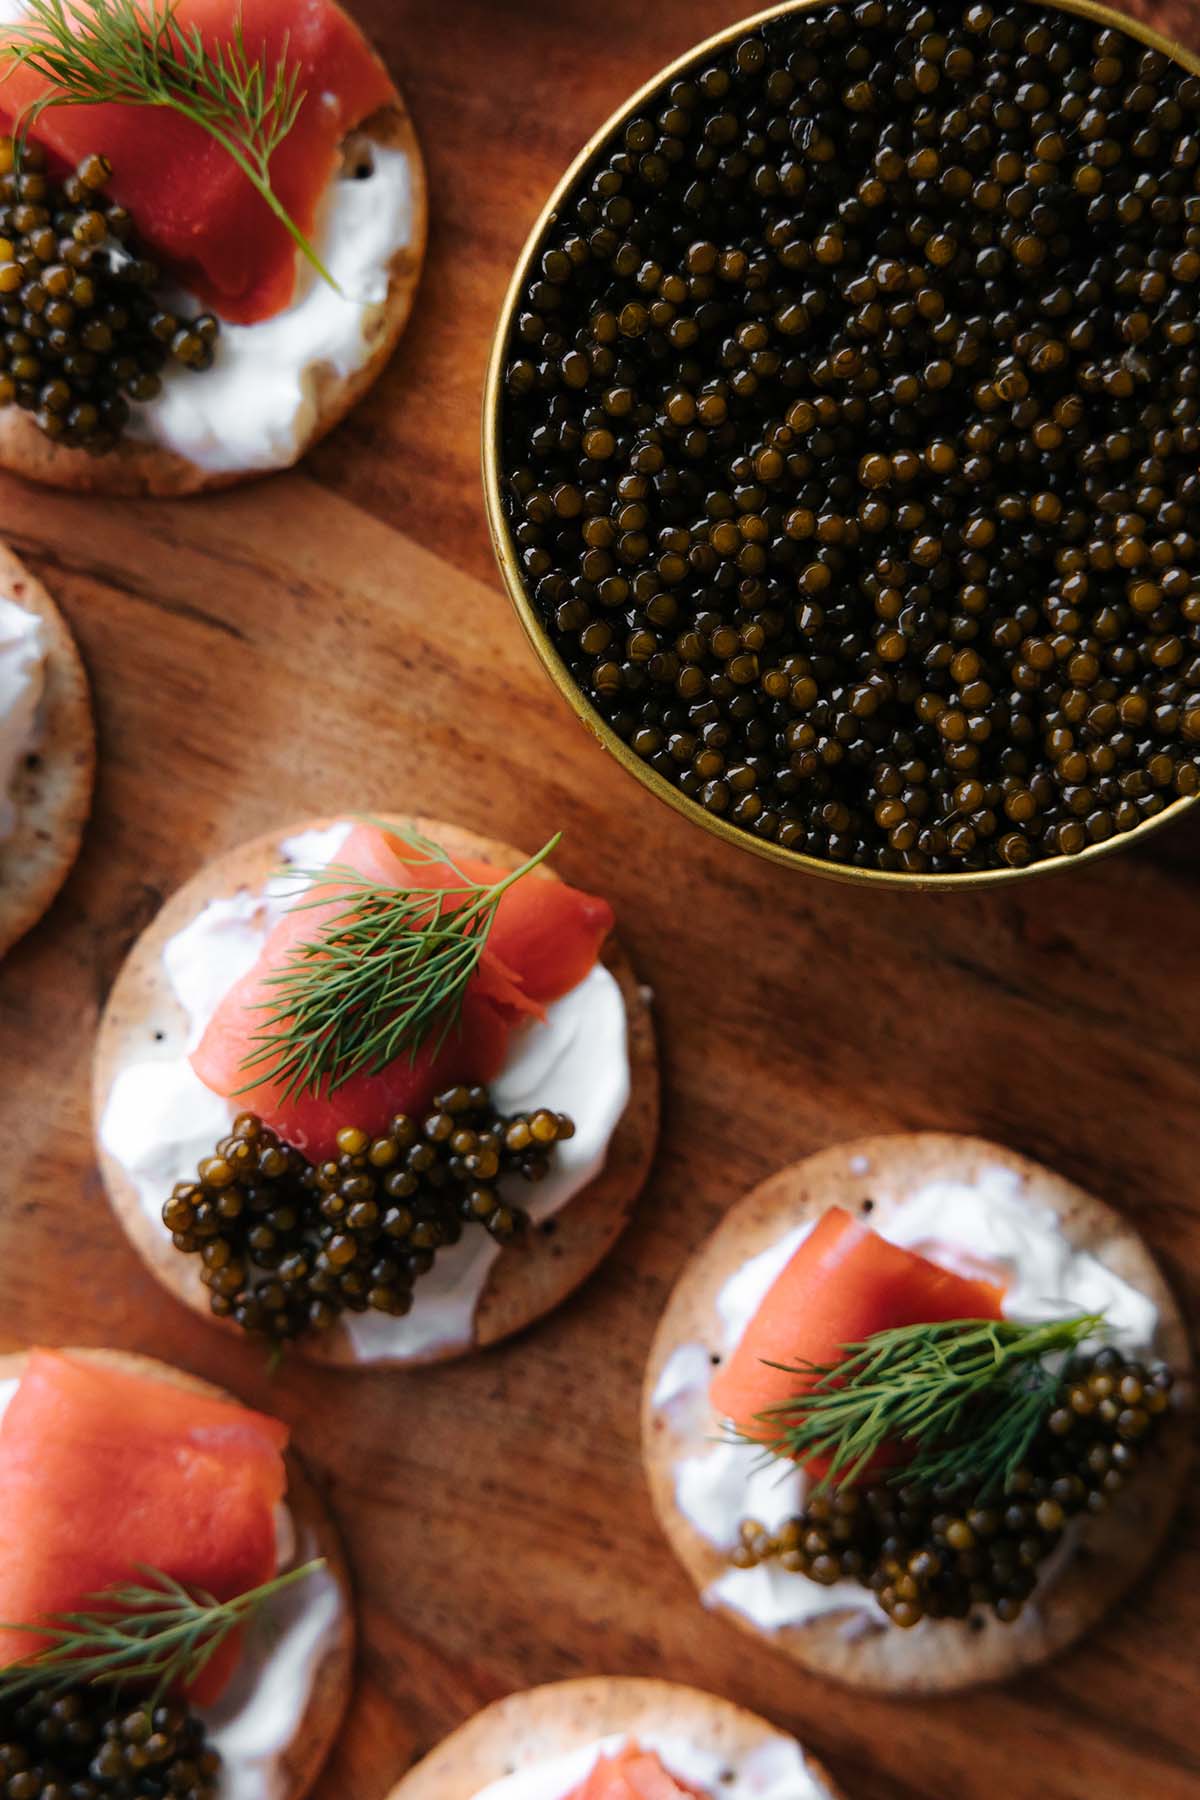 tin of caviar next to crackers with salmon.